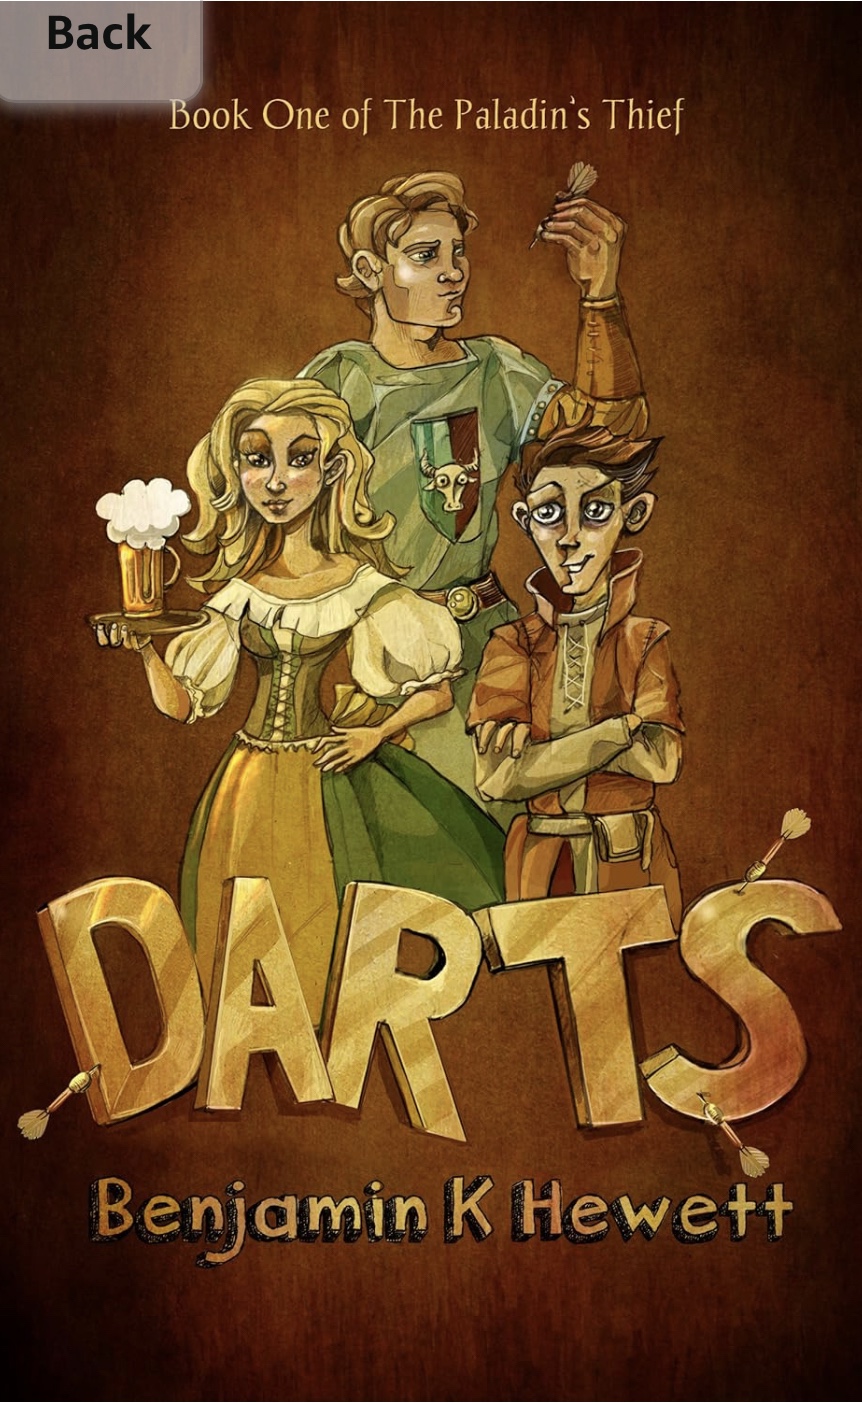 Book Review: Darts by Benjamin Hewett